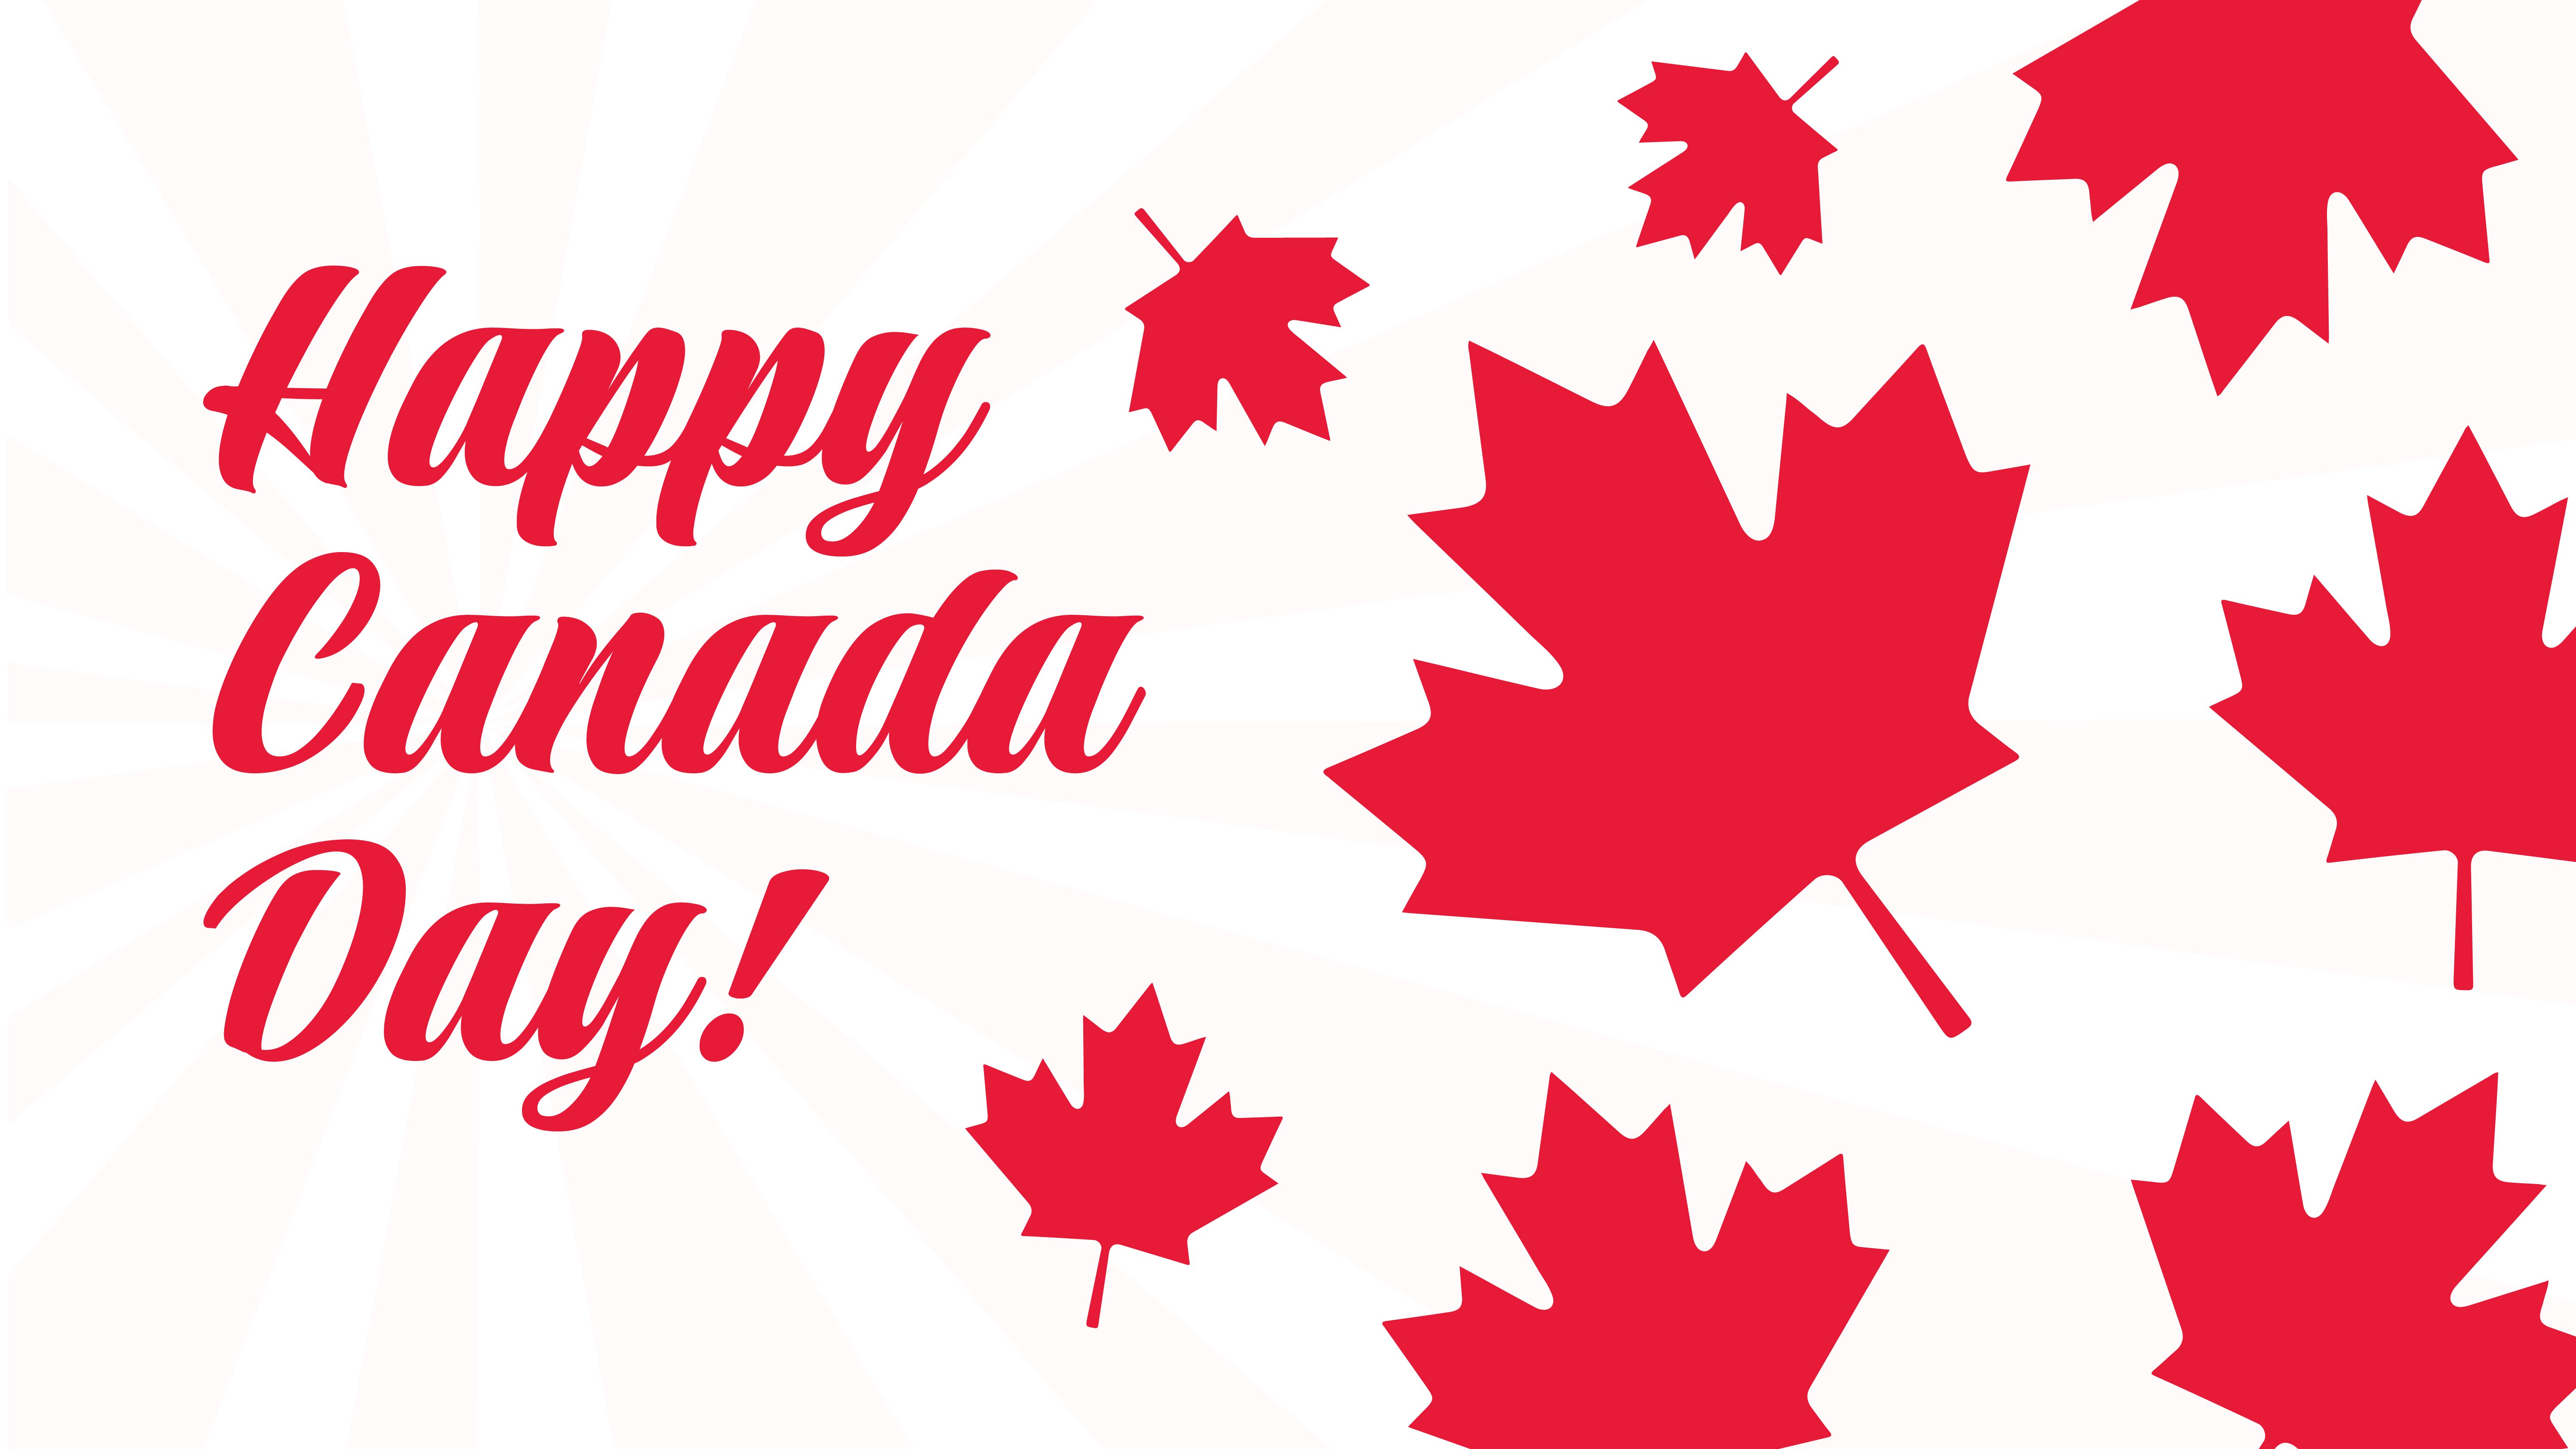 FREE Canada Day Wallpaper Image Download in PDF, Illustrator